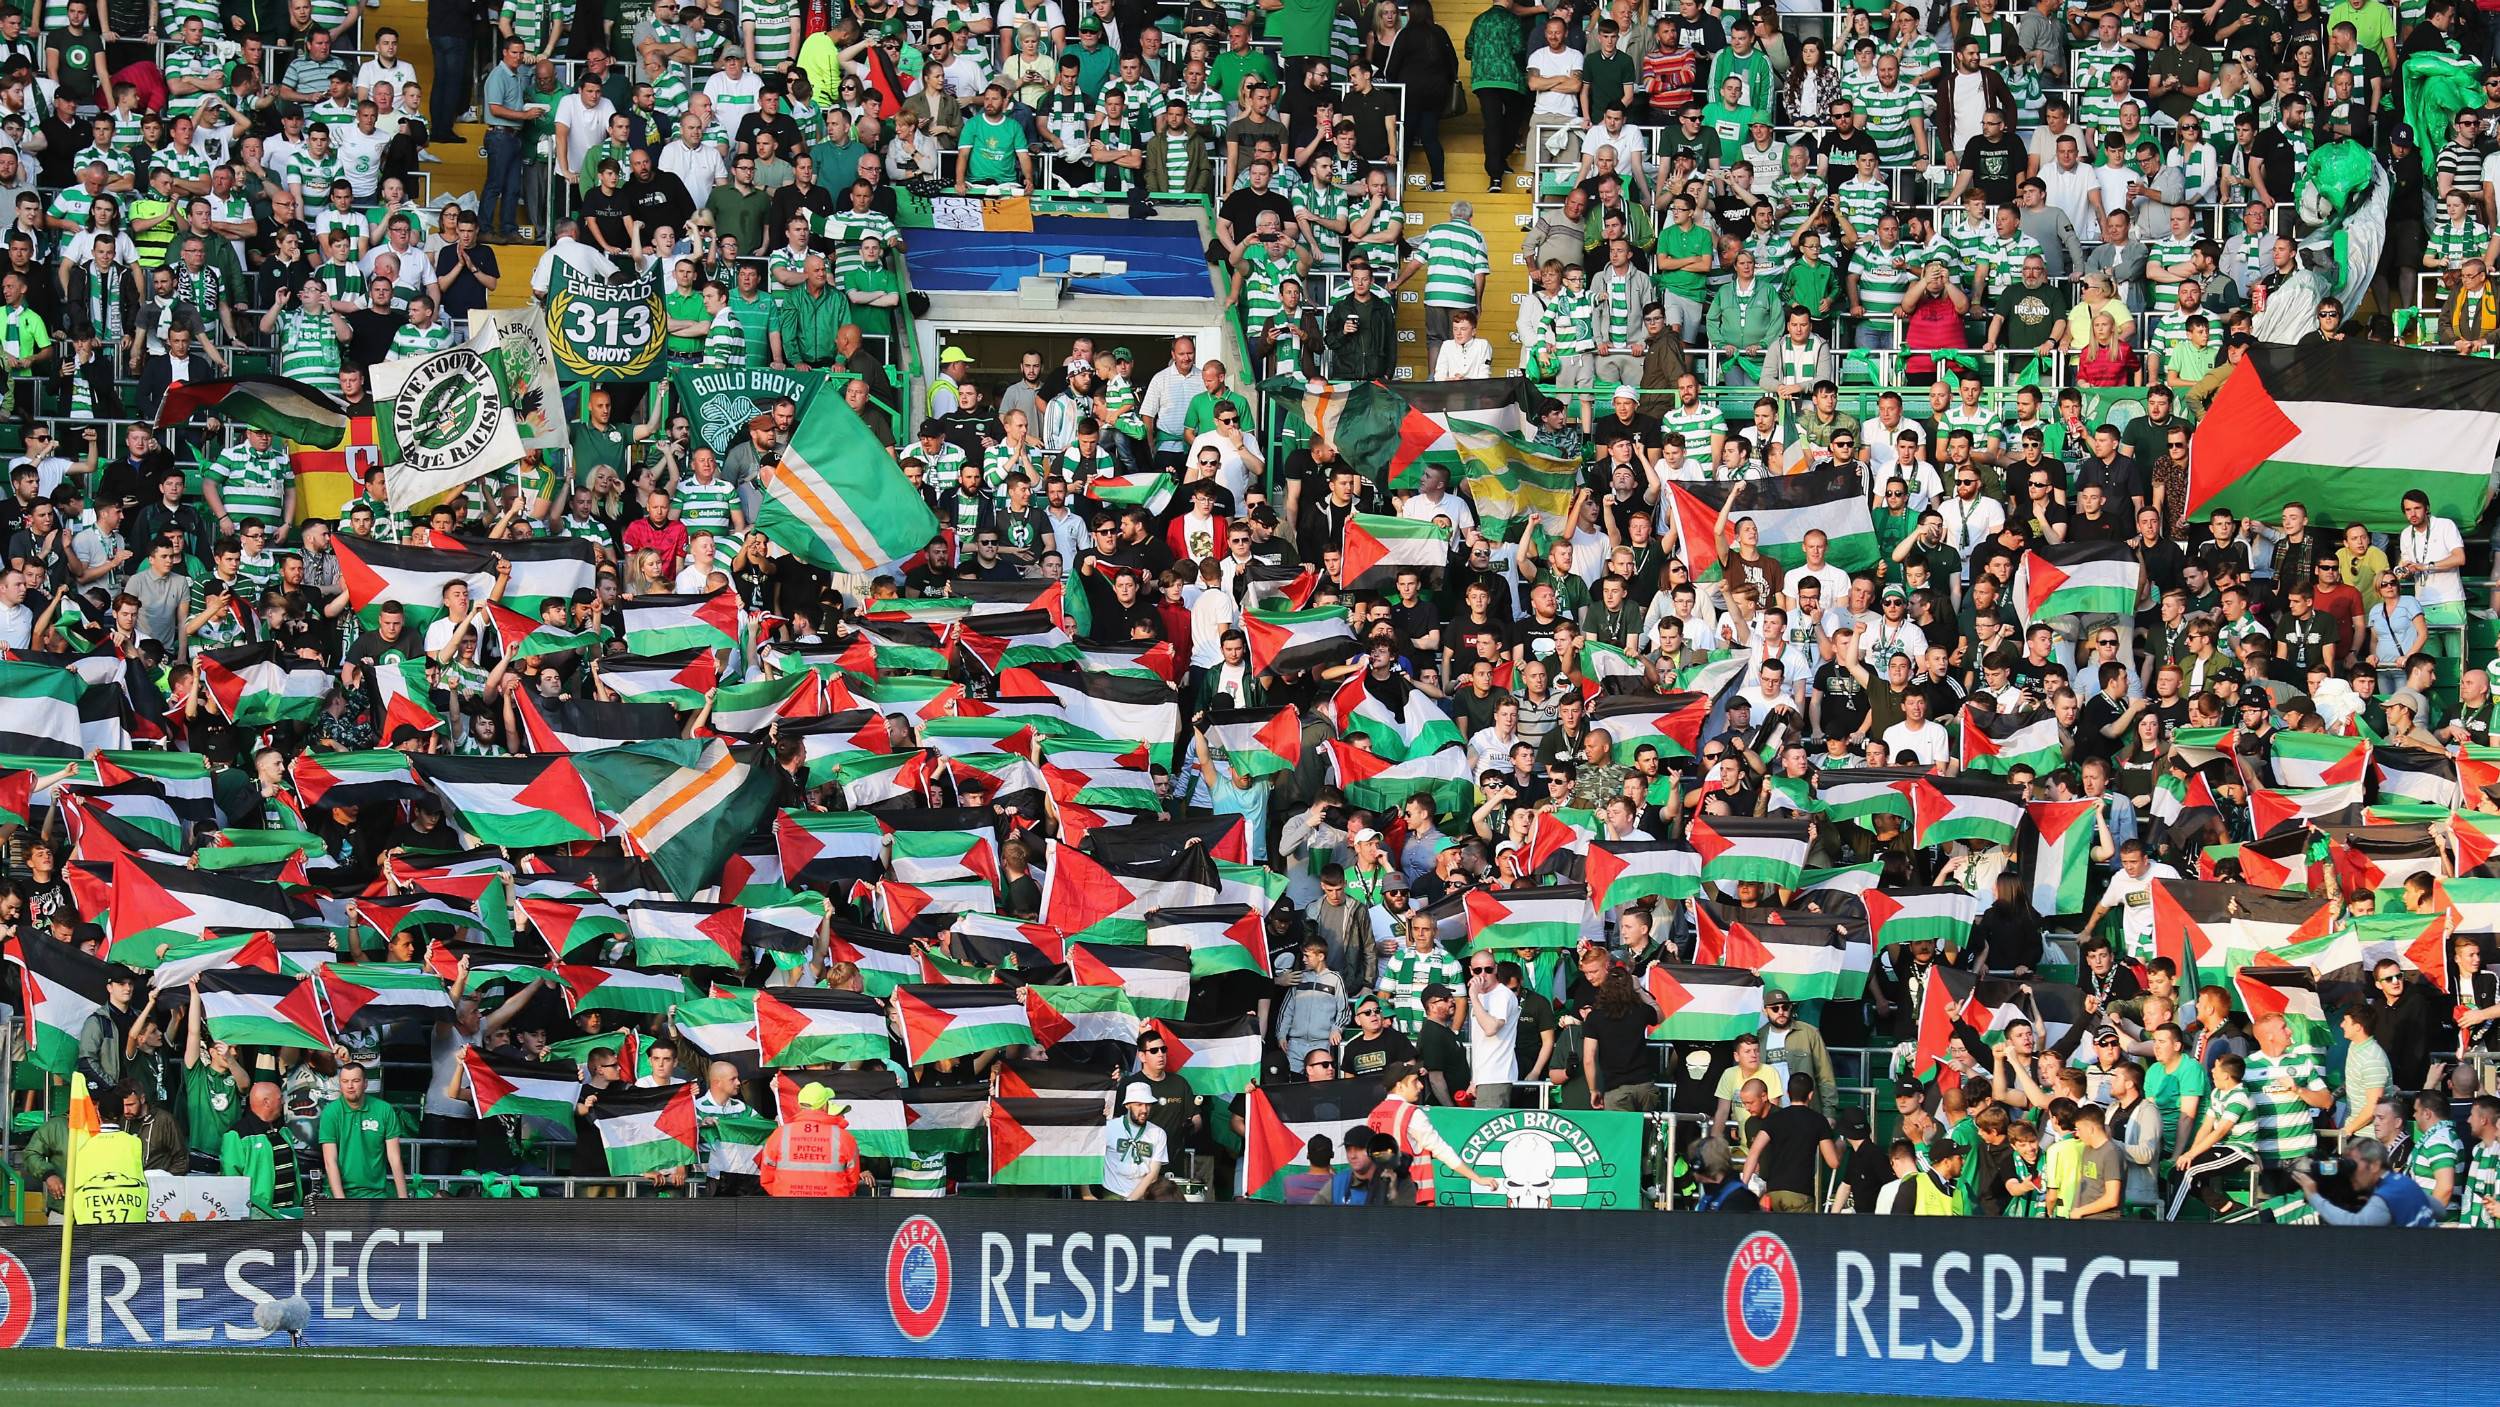 celtic-fans-palestine-flags_egrilgruha4f1f164t16kpqgr.jpg